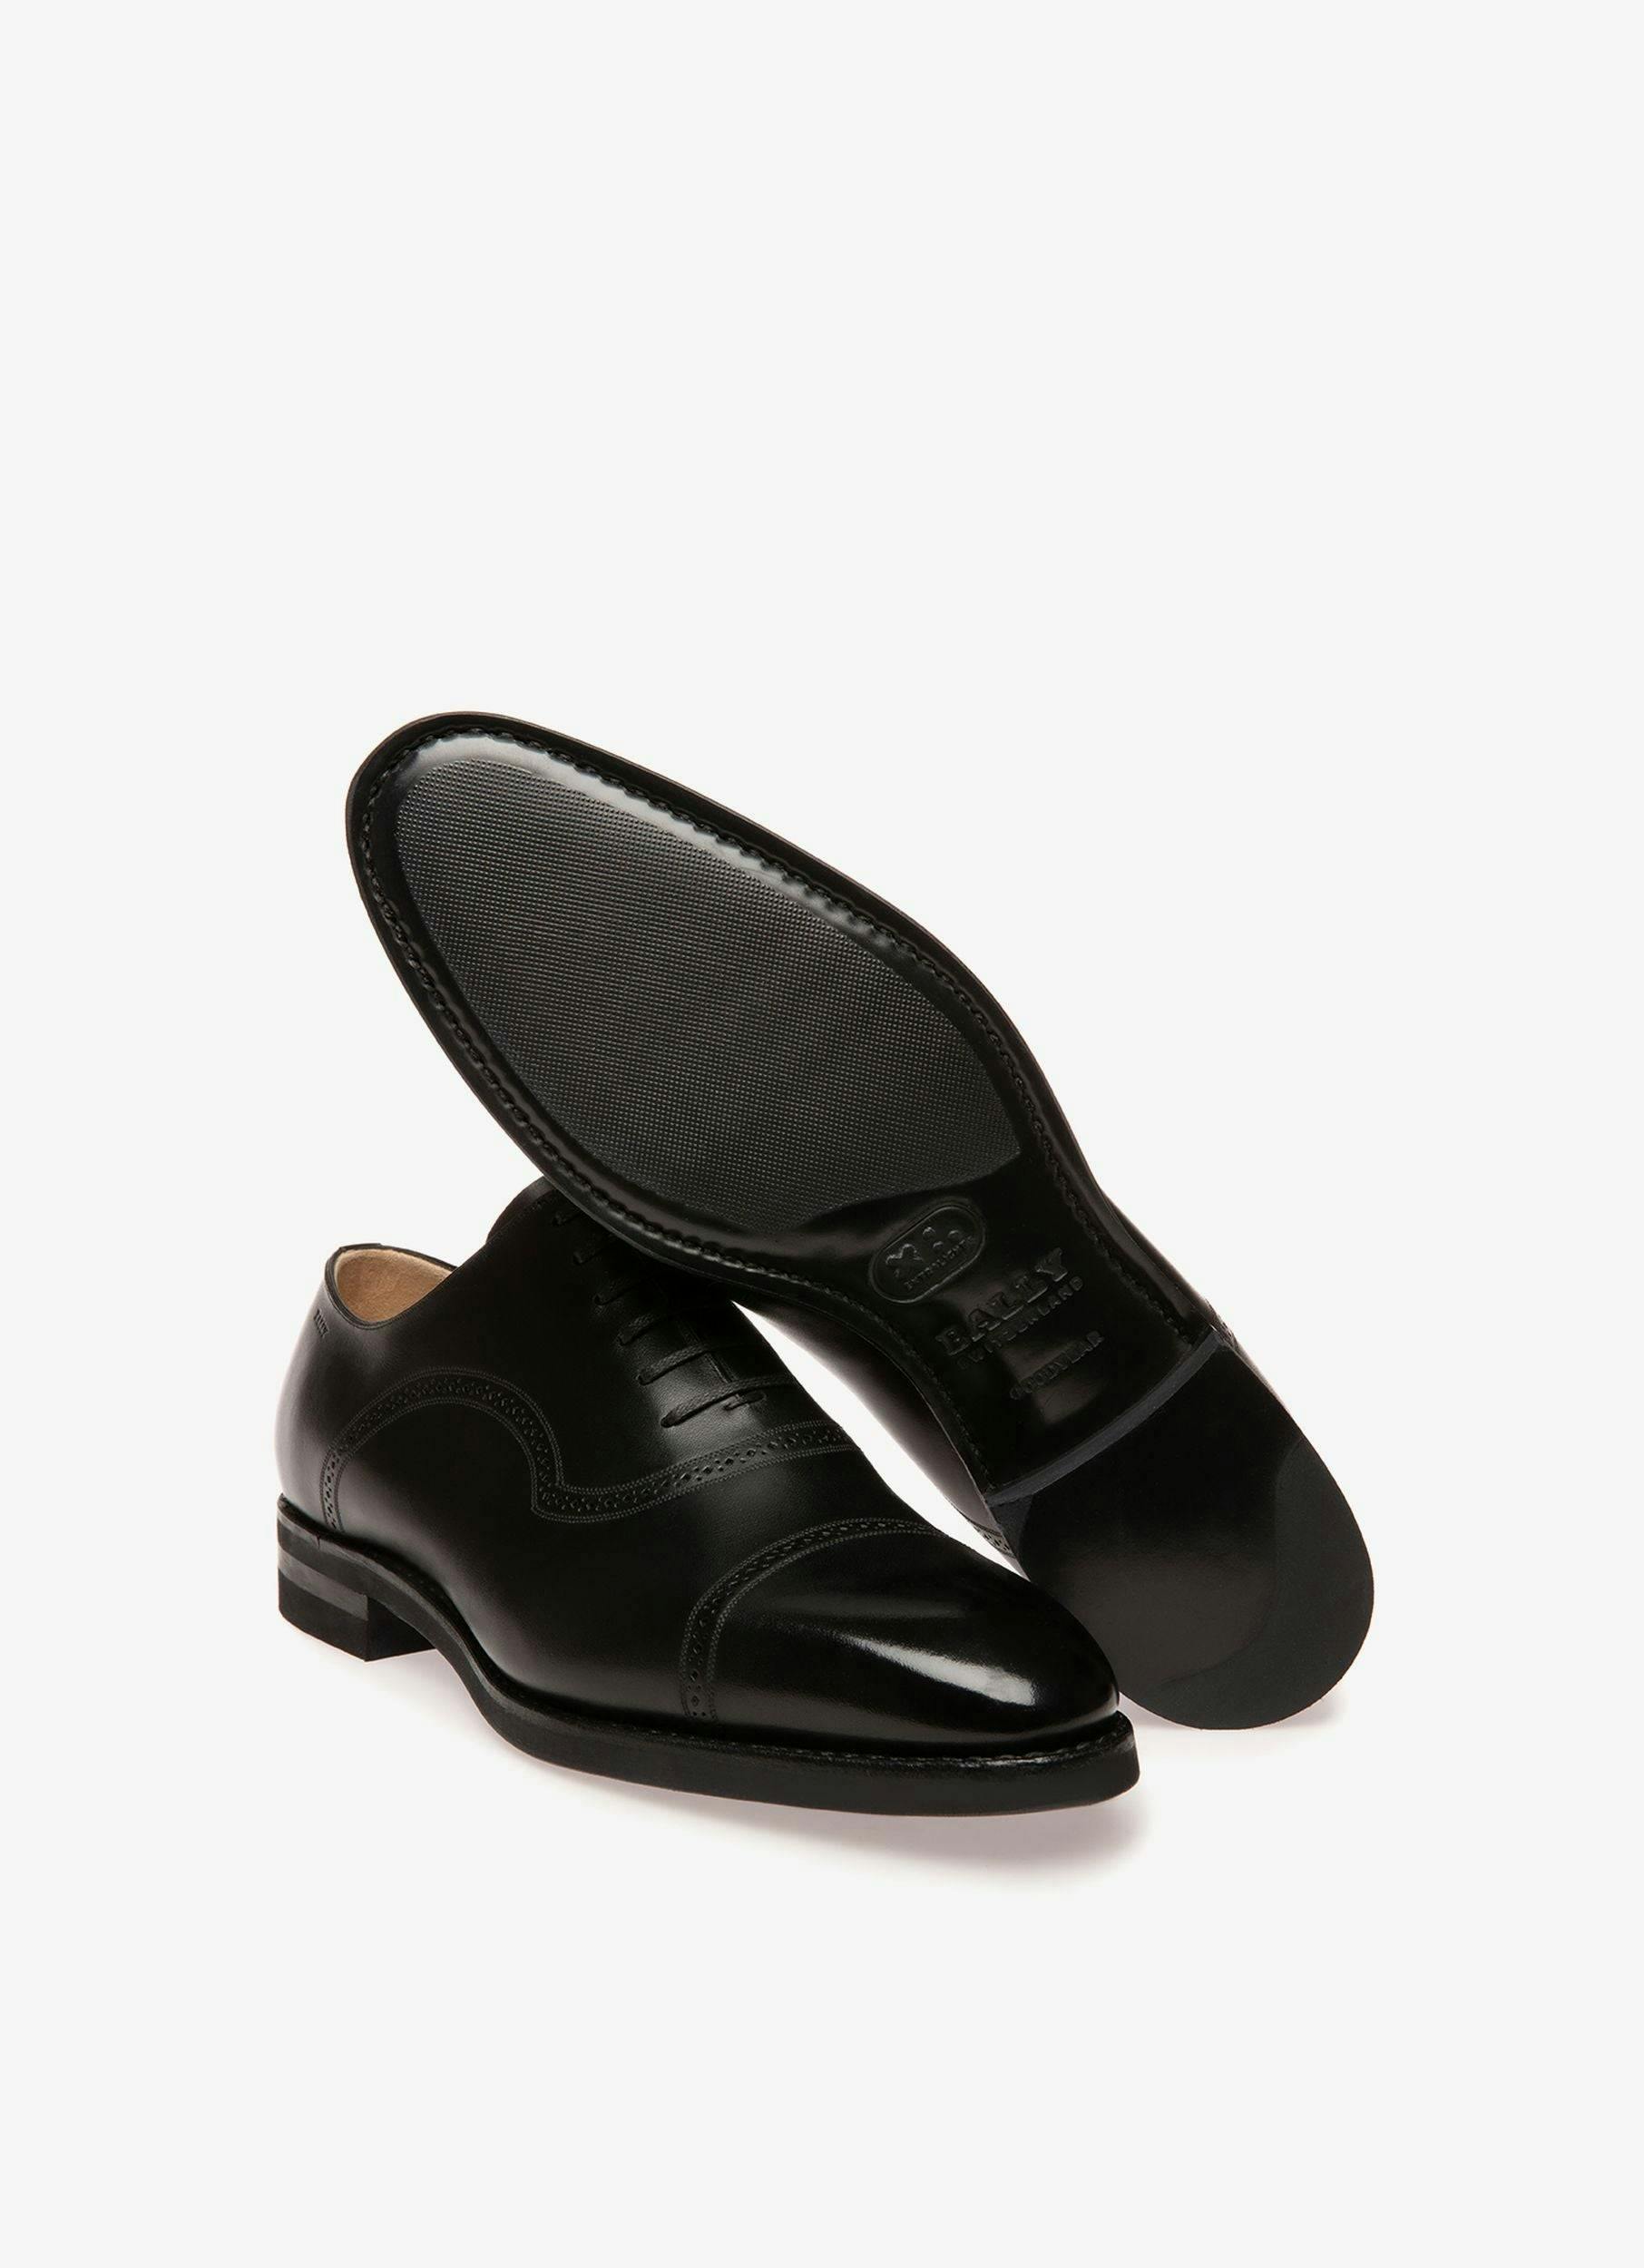 Scribe Novo Oxford Shoes In Black Leather - Men's - Bally - 03